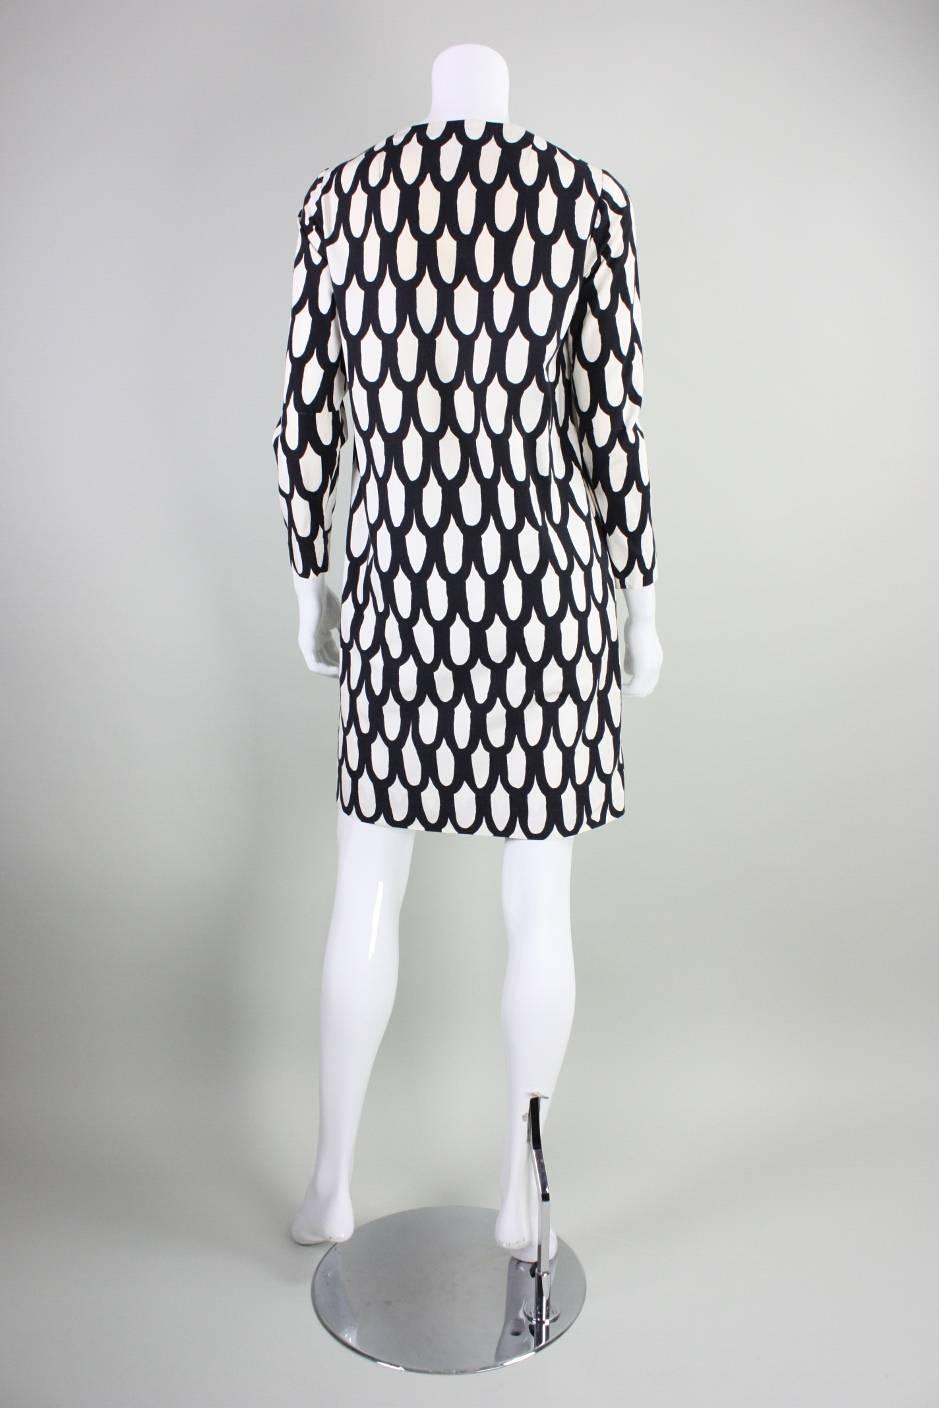 1965 Marimekko Black & White Printed Dress For Sale 1